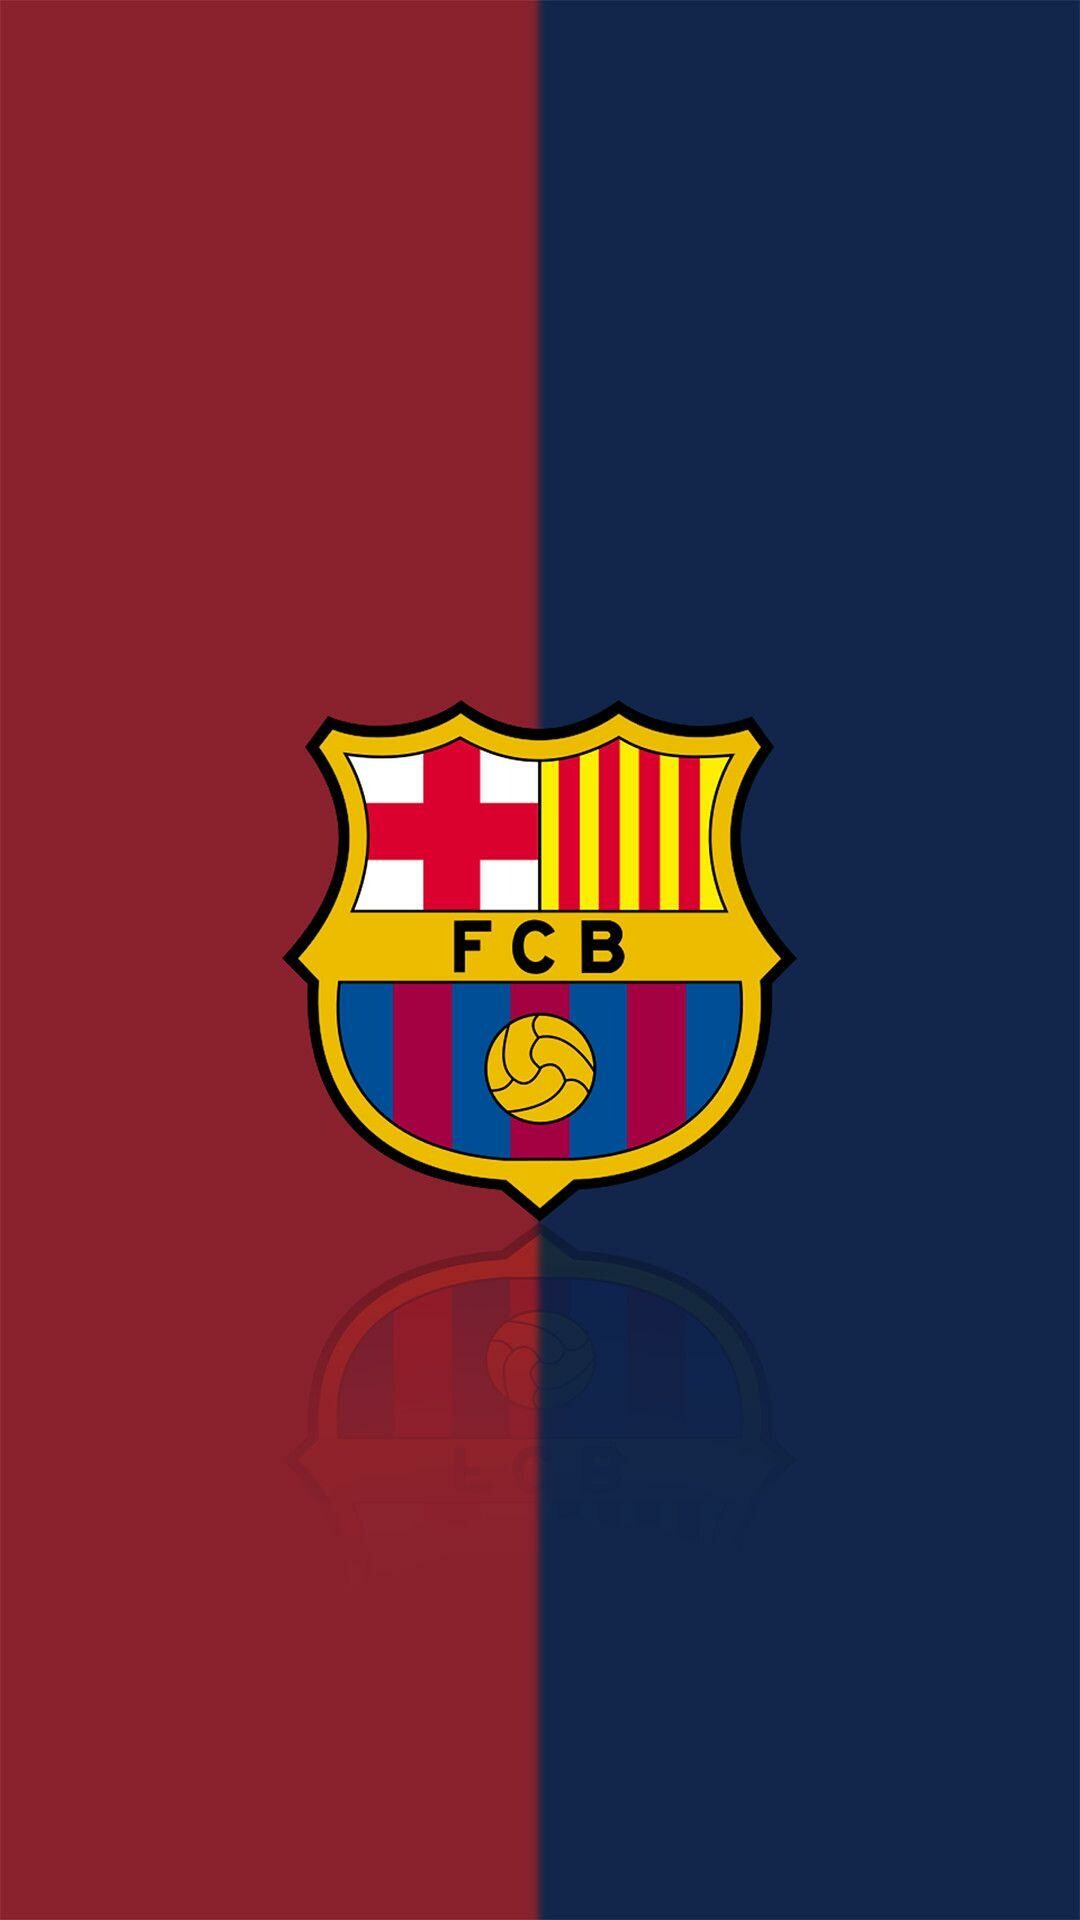 FC Barcelona: A Spanish-Catalan professional football club based in Spain. 1080x1920 Full HD Wallpaper.